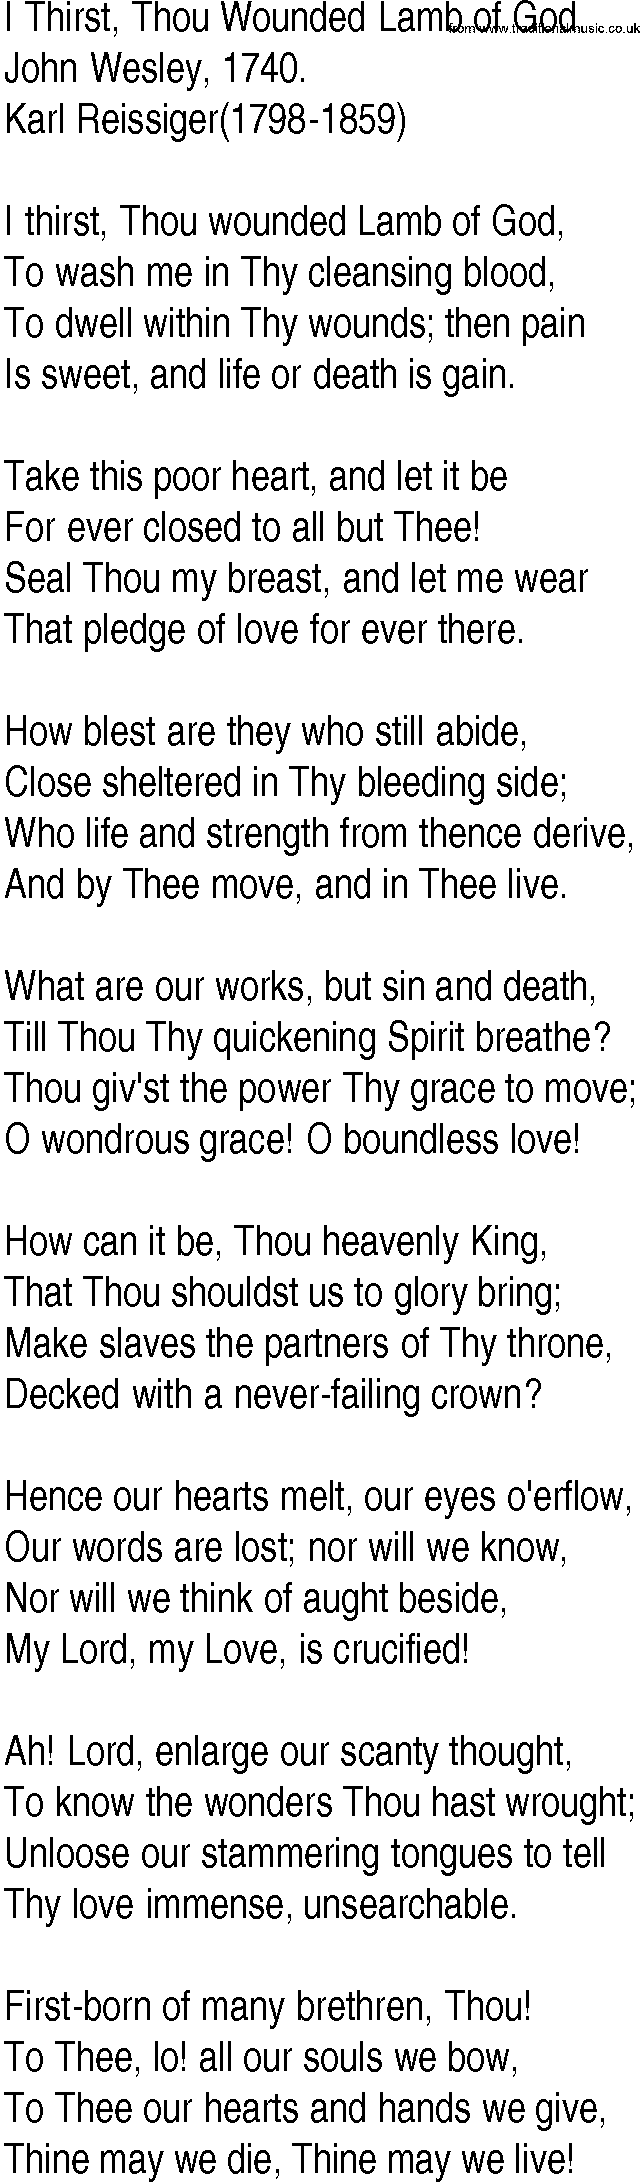 Hymn and Gospel Song: I Thirst, Thou Wounded Lamb of God by John Wesley lyrics